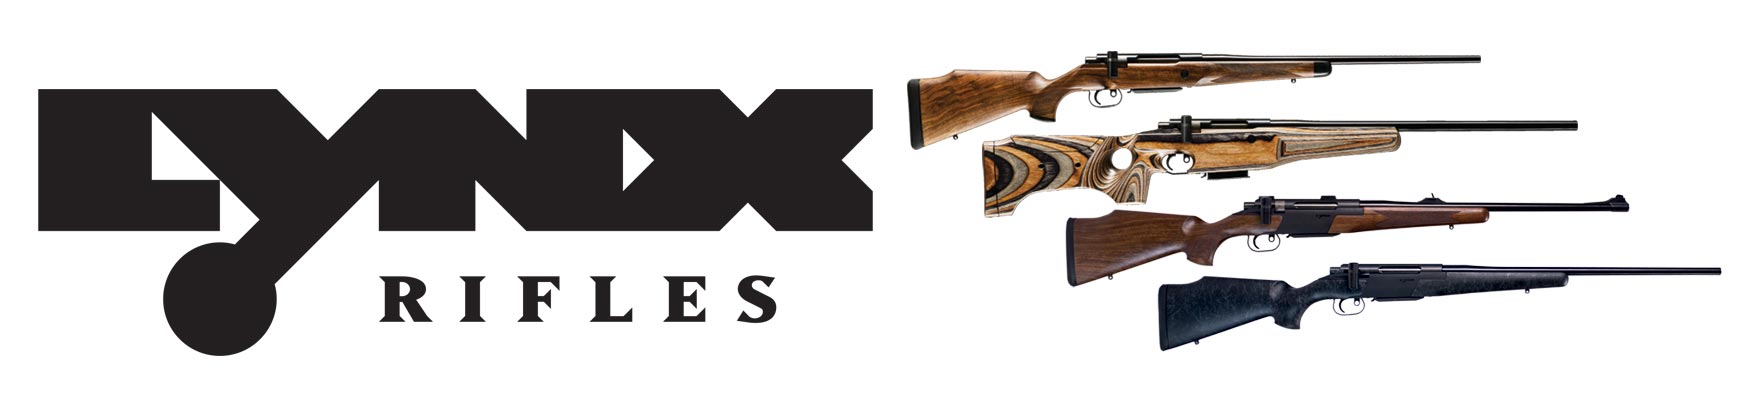 Lynx 94 Rifles